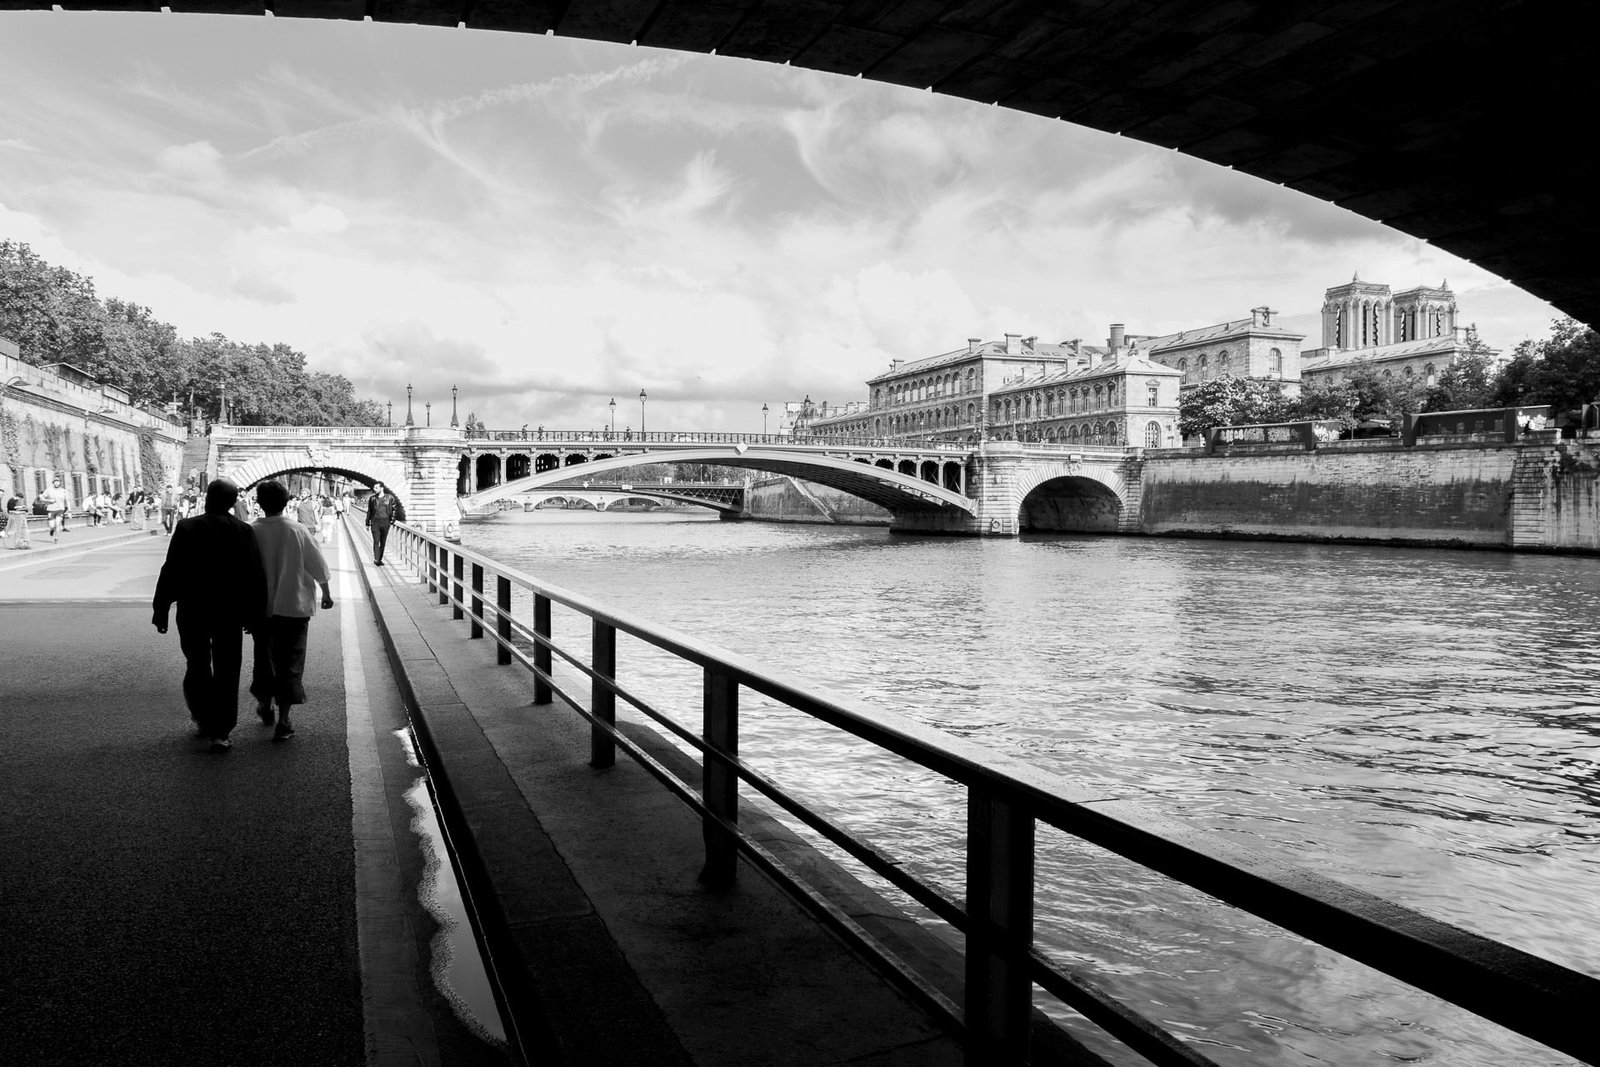 Walking near the Seine river